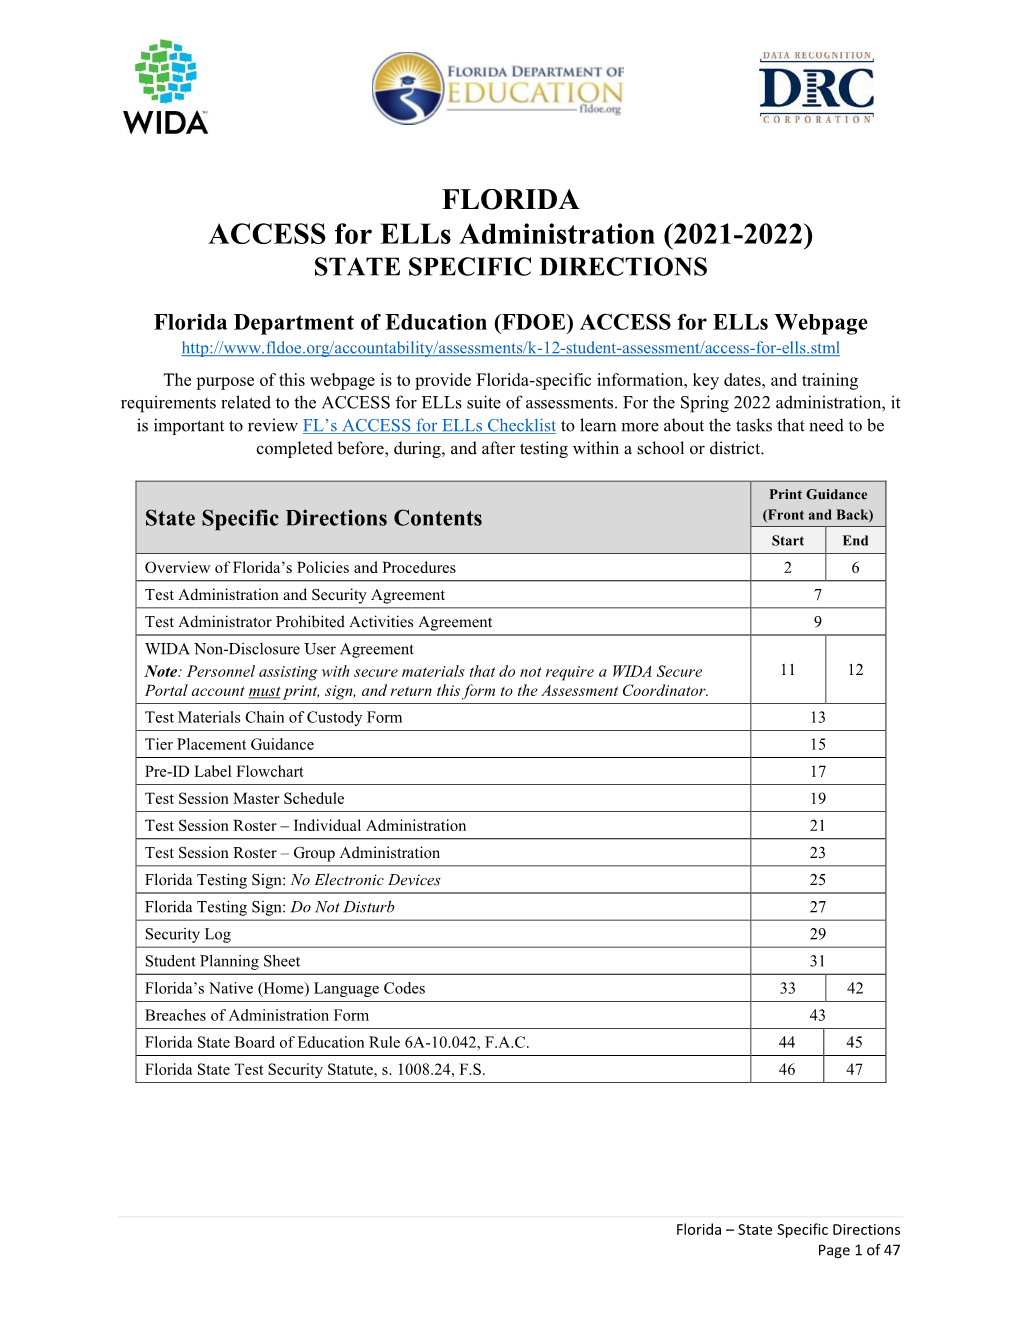 FLORIDA ACCESS for Ells Administration (2020-2021)